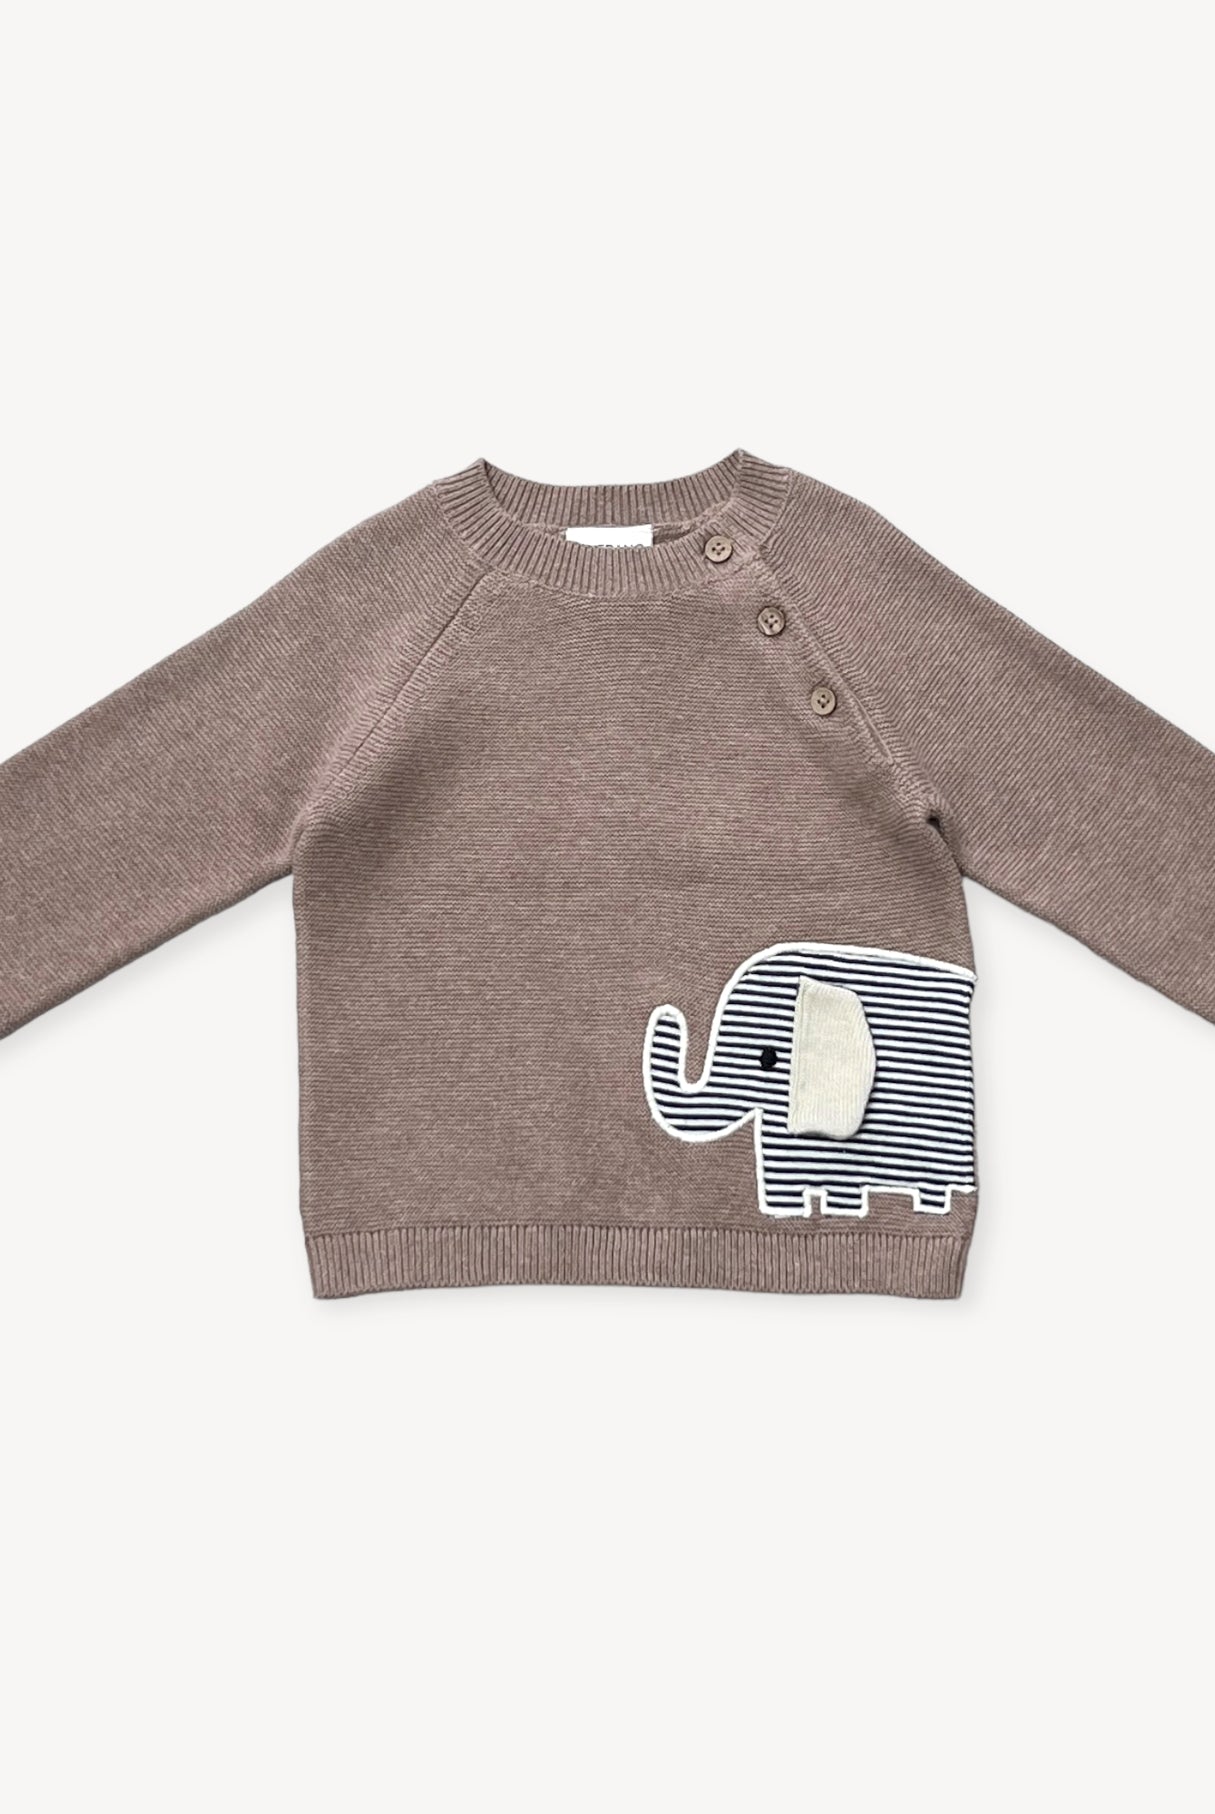 
  
  Elephant Appliqué Baby Pullover
  
